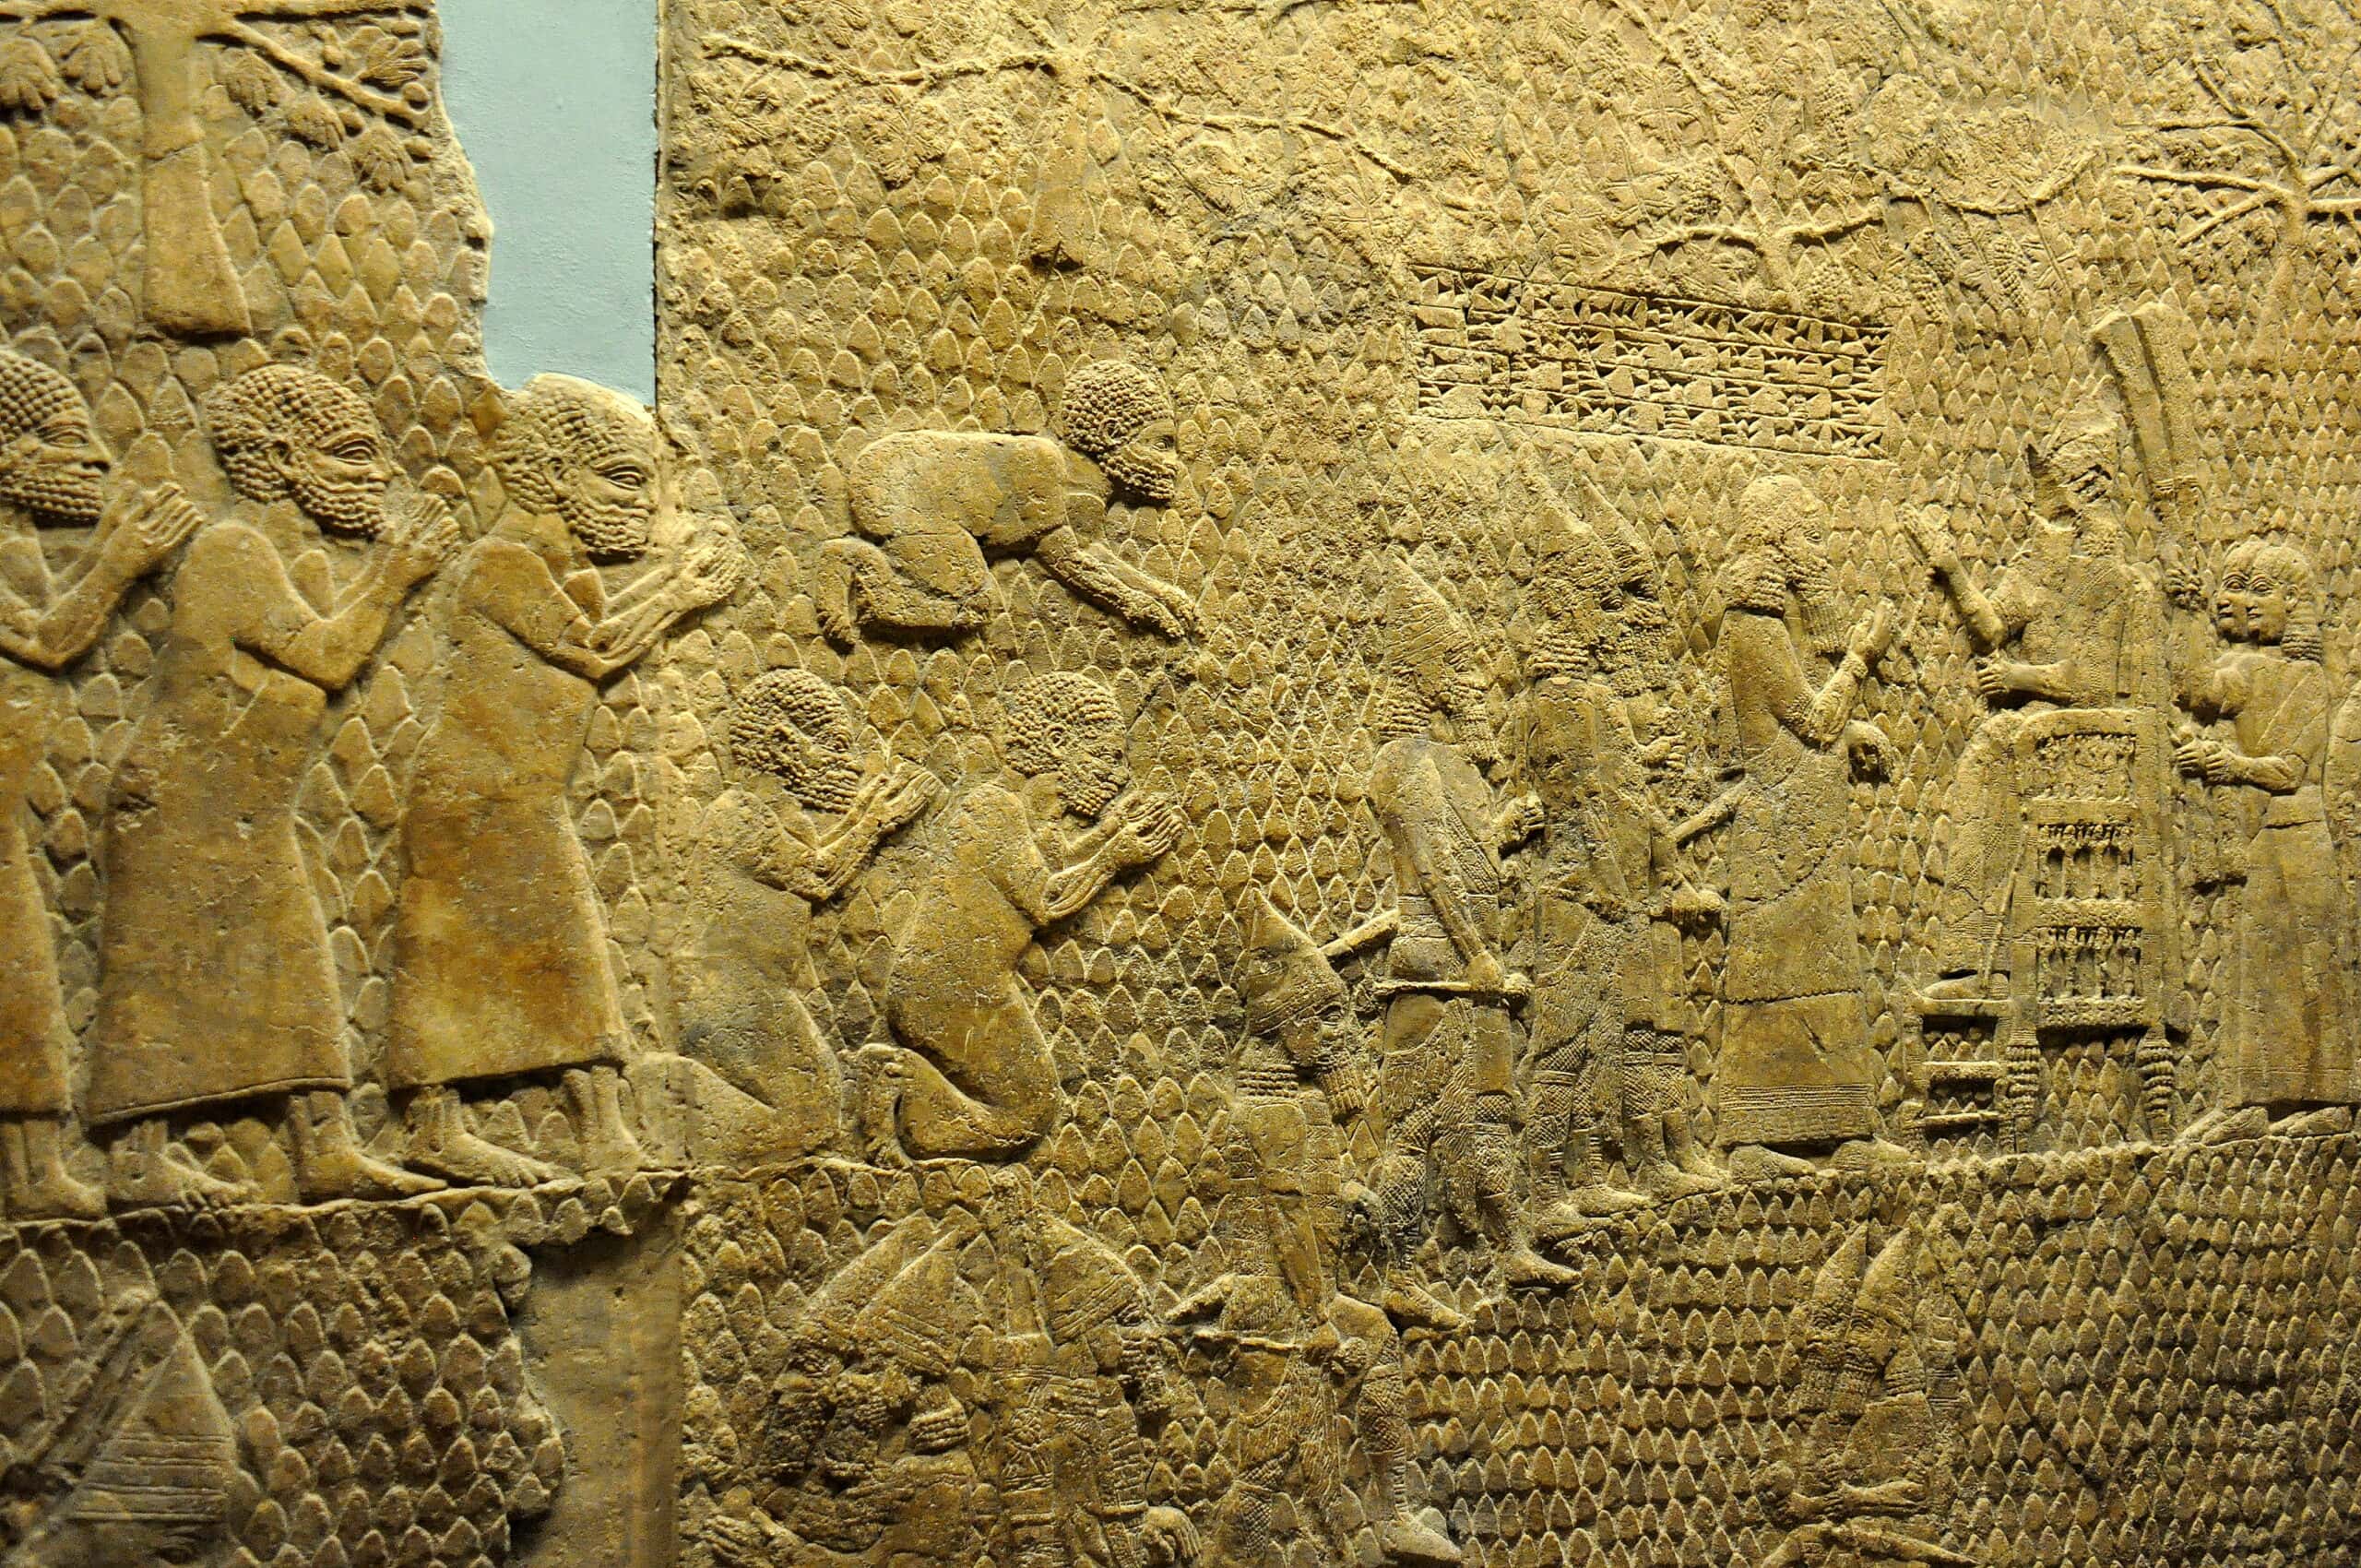 Assyrian Empire facts